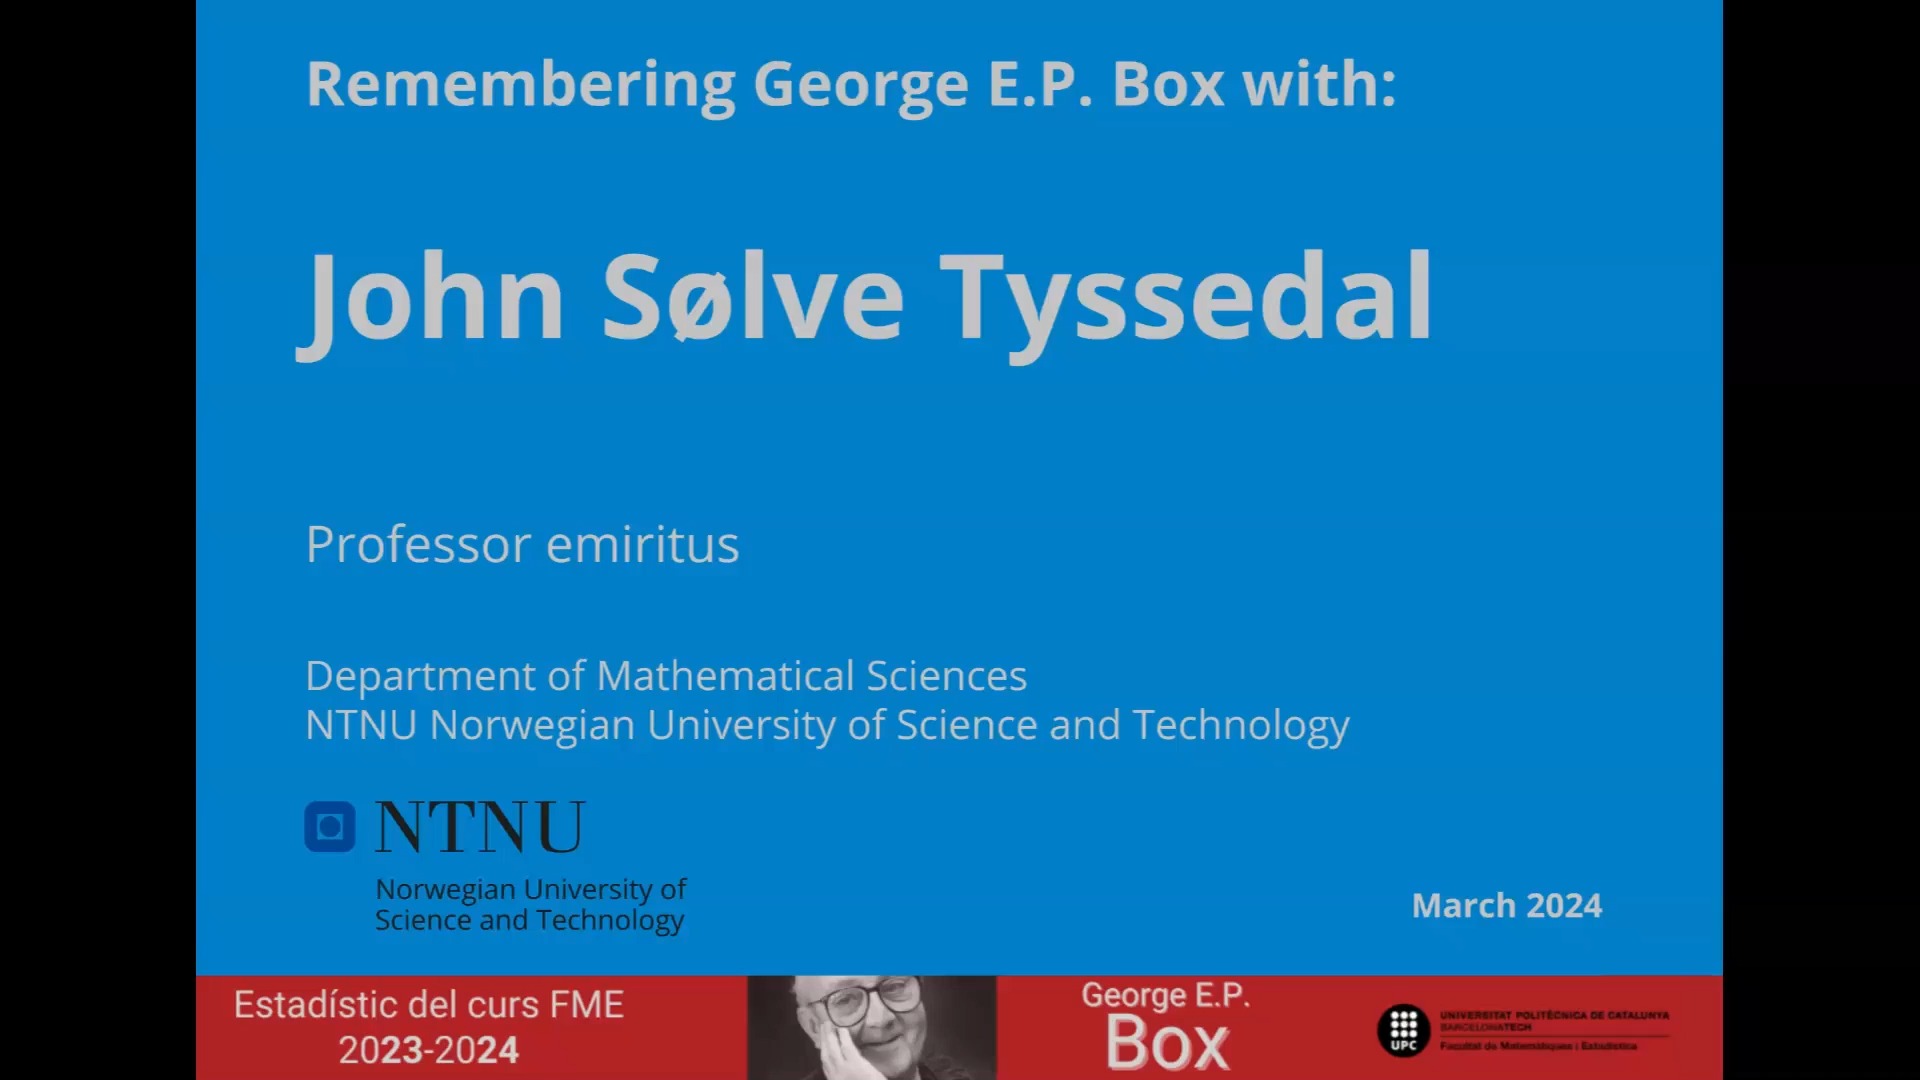 Remembering George E.P. Box with: John Sølve Tyssedal (NTNU Norwegian University of Science and Technology) Curs Box 2023-2024